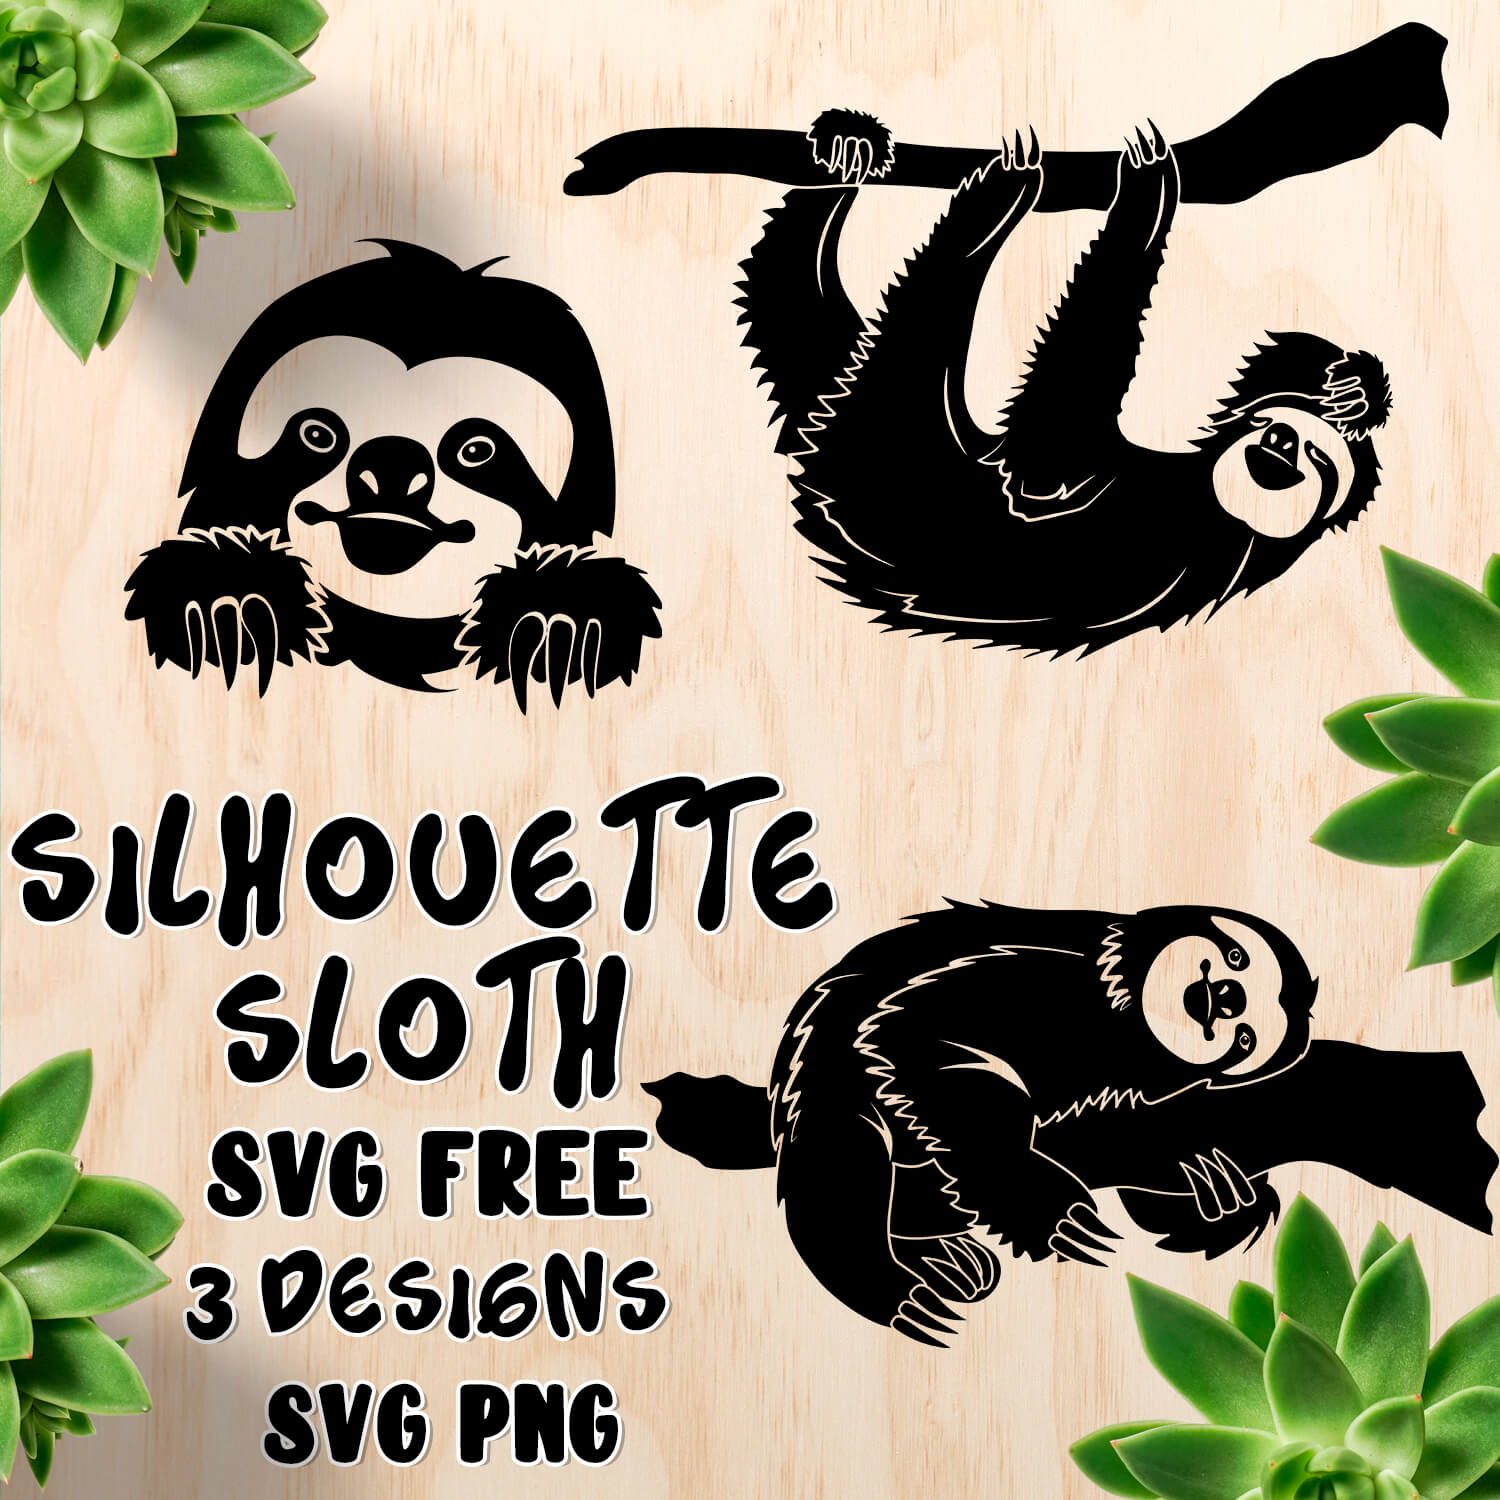 Silhouette Sloth SVG Free.